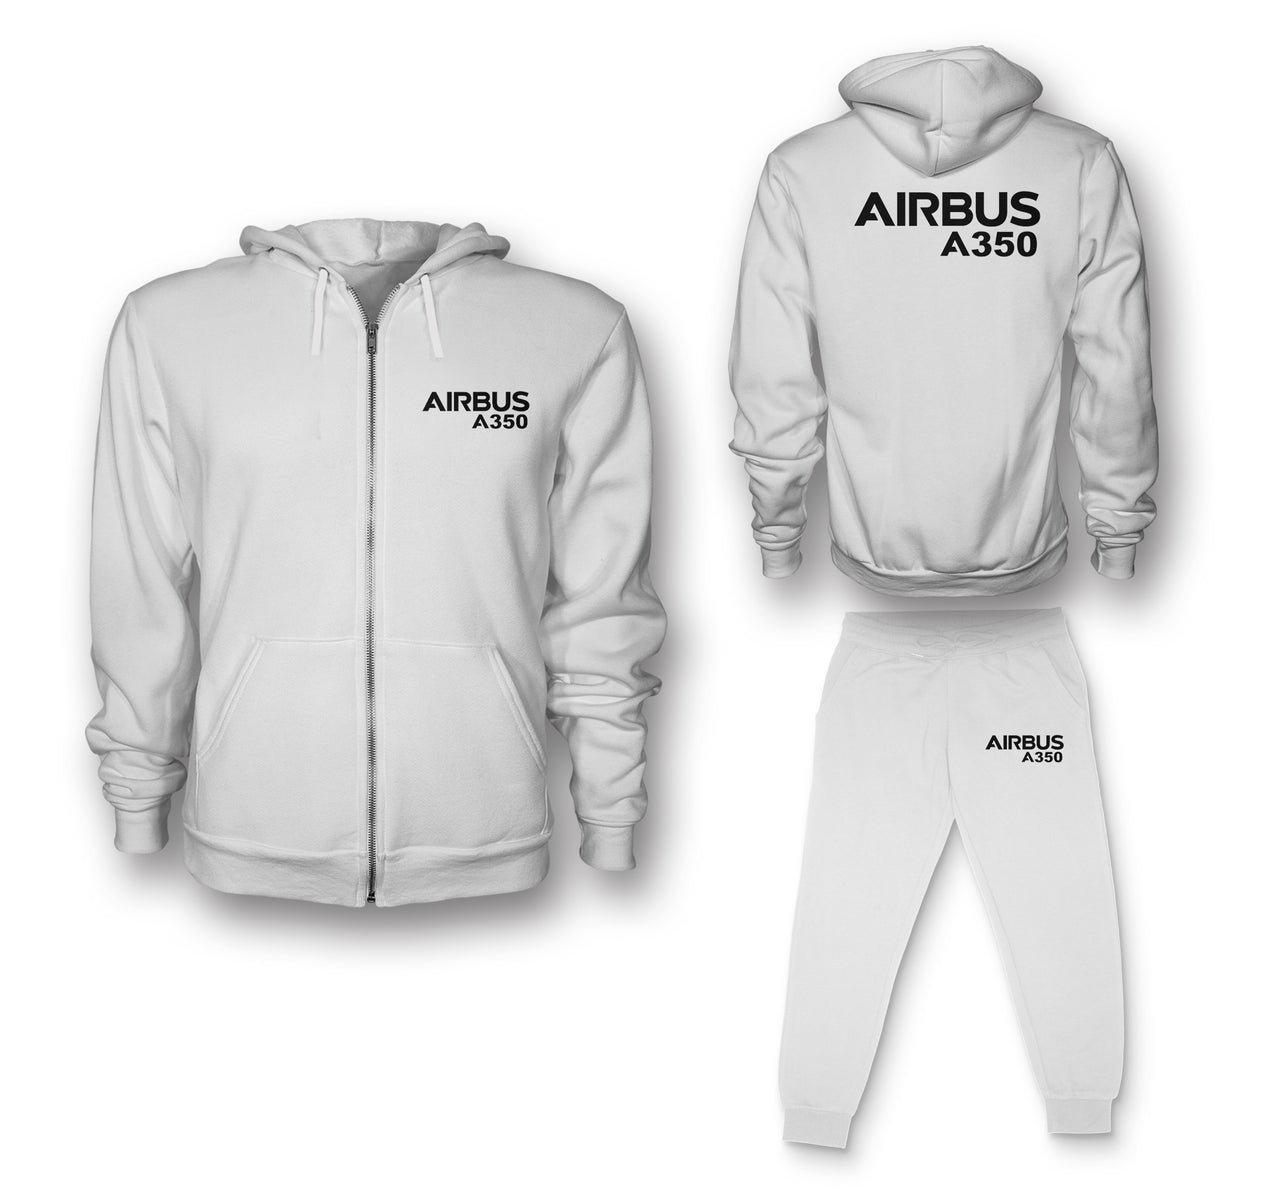 Airbus A350 & Text Designed Zipped Hoodies & Sweatpants Set